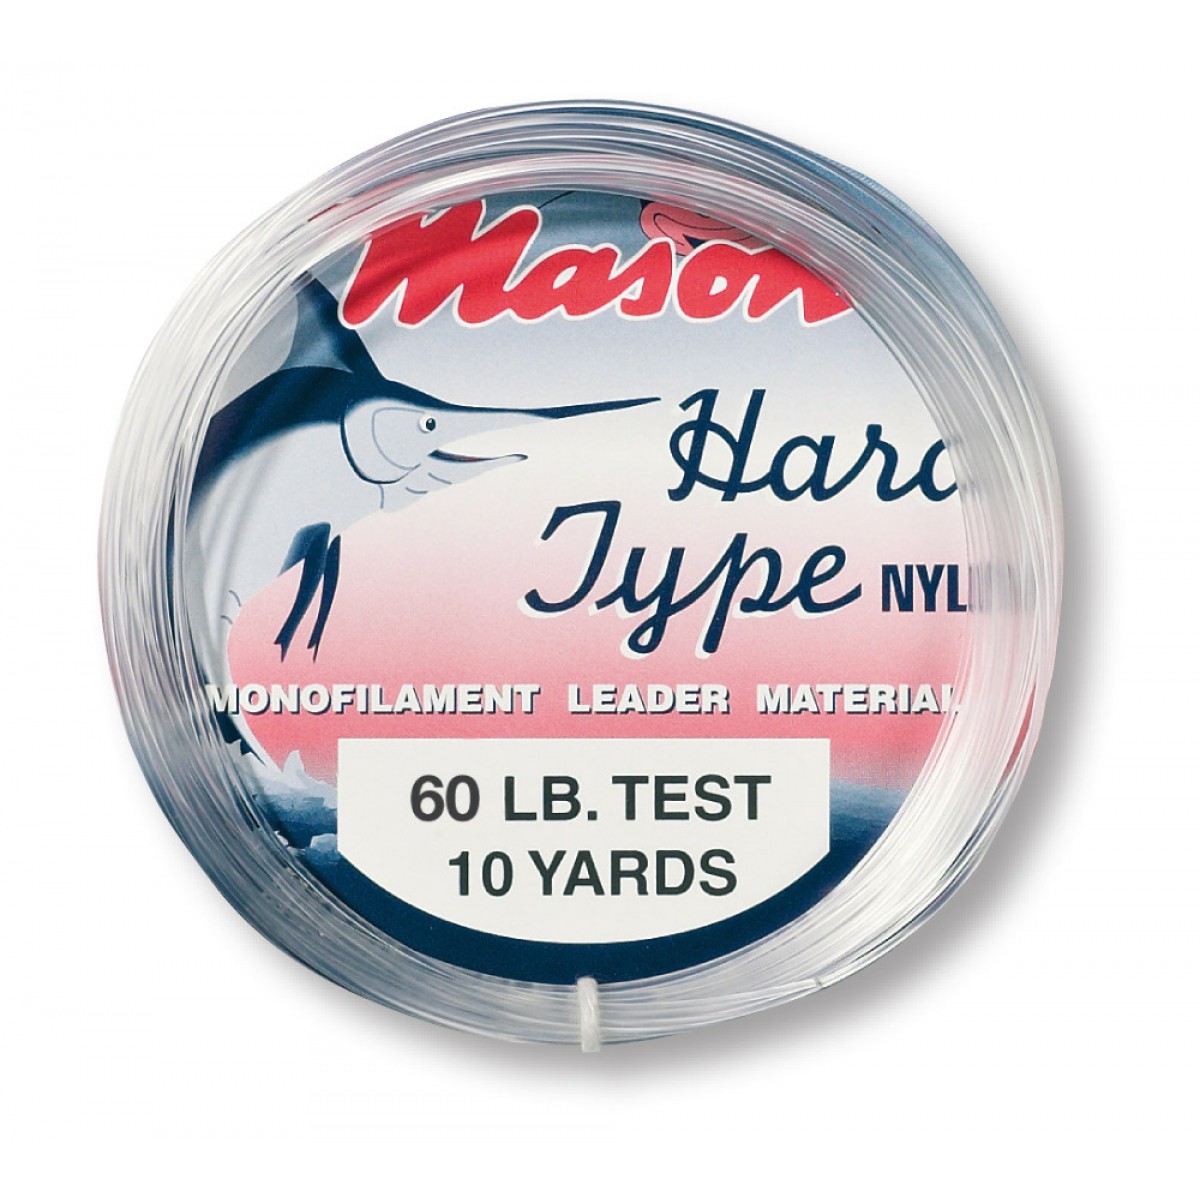 Mason Hard Type Nylon, Monofilament Leader Material, 10 lb. Test